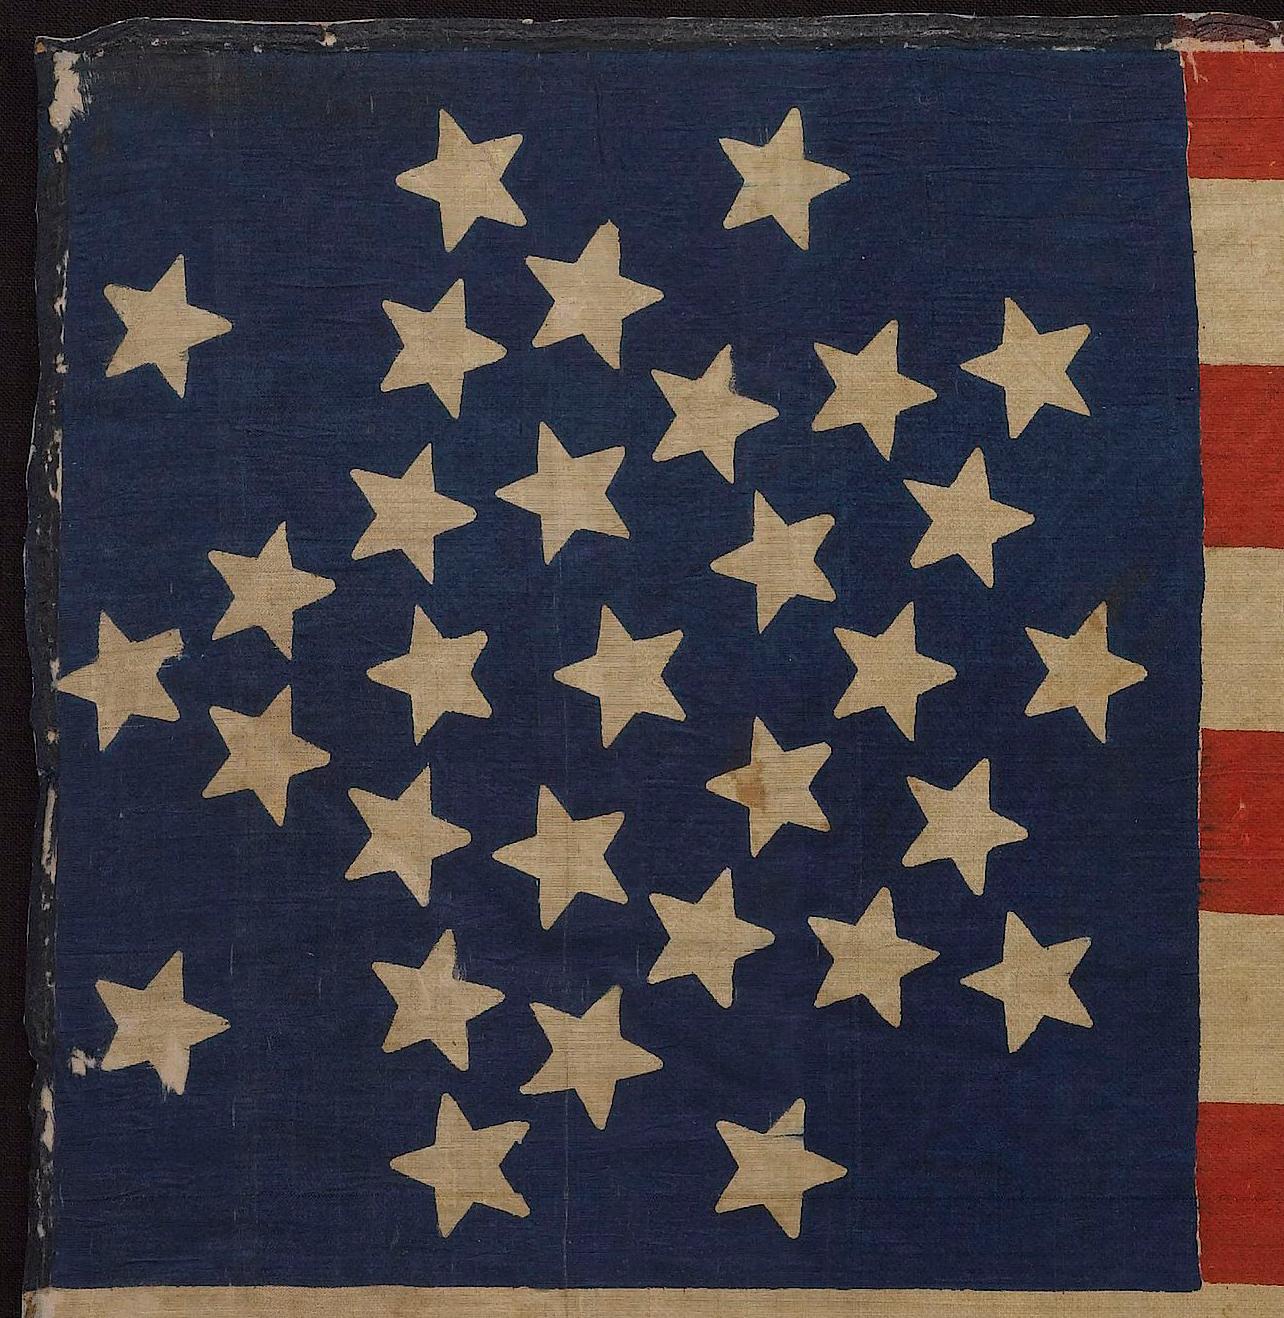 american flag in 1850